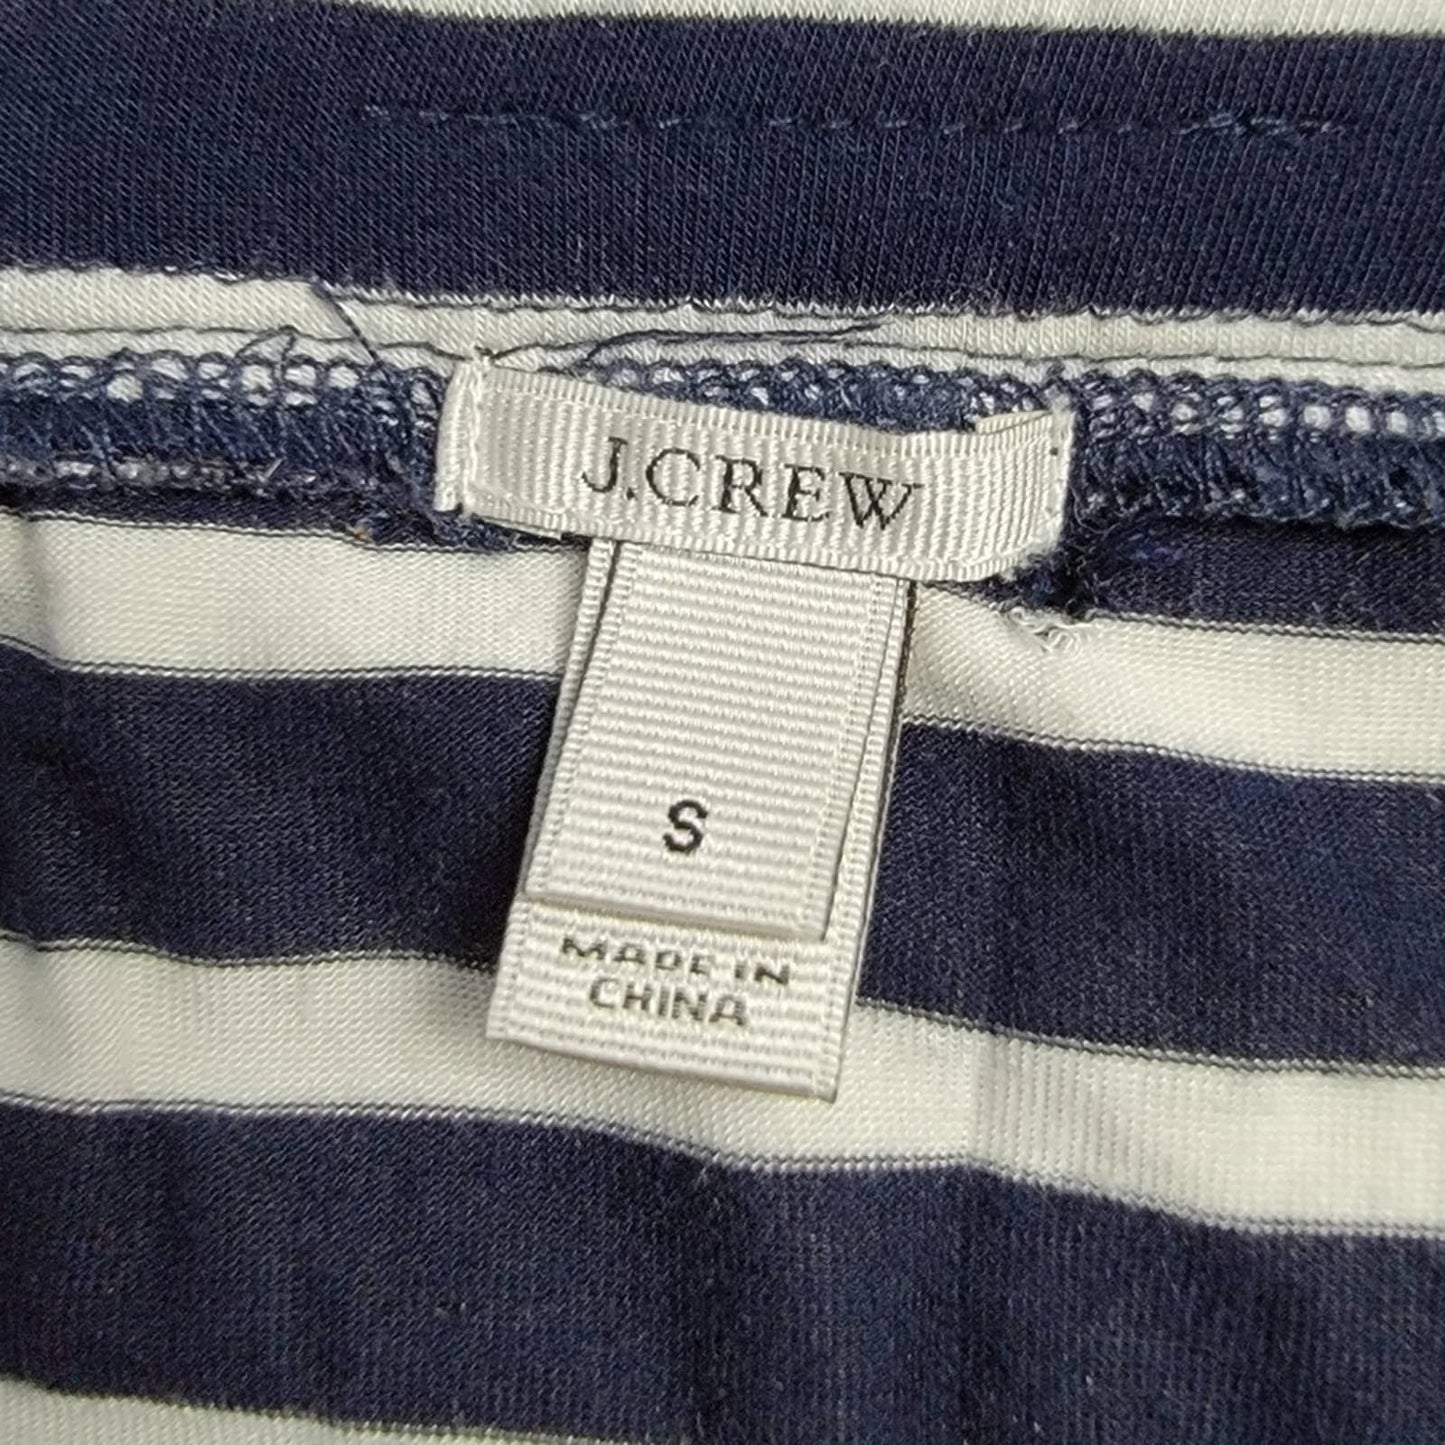 J.Crew Casual Maxi Striped Skirt - S